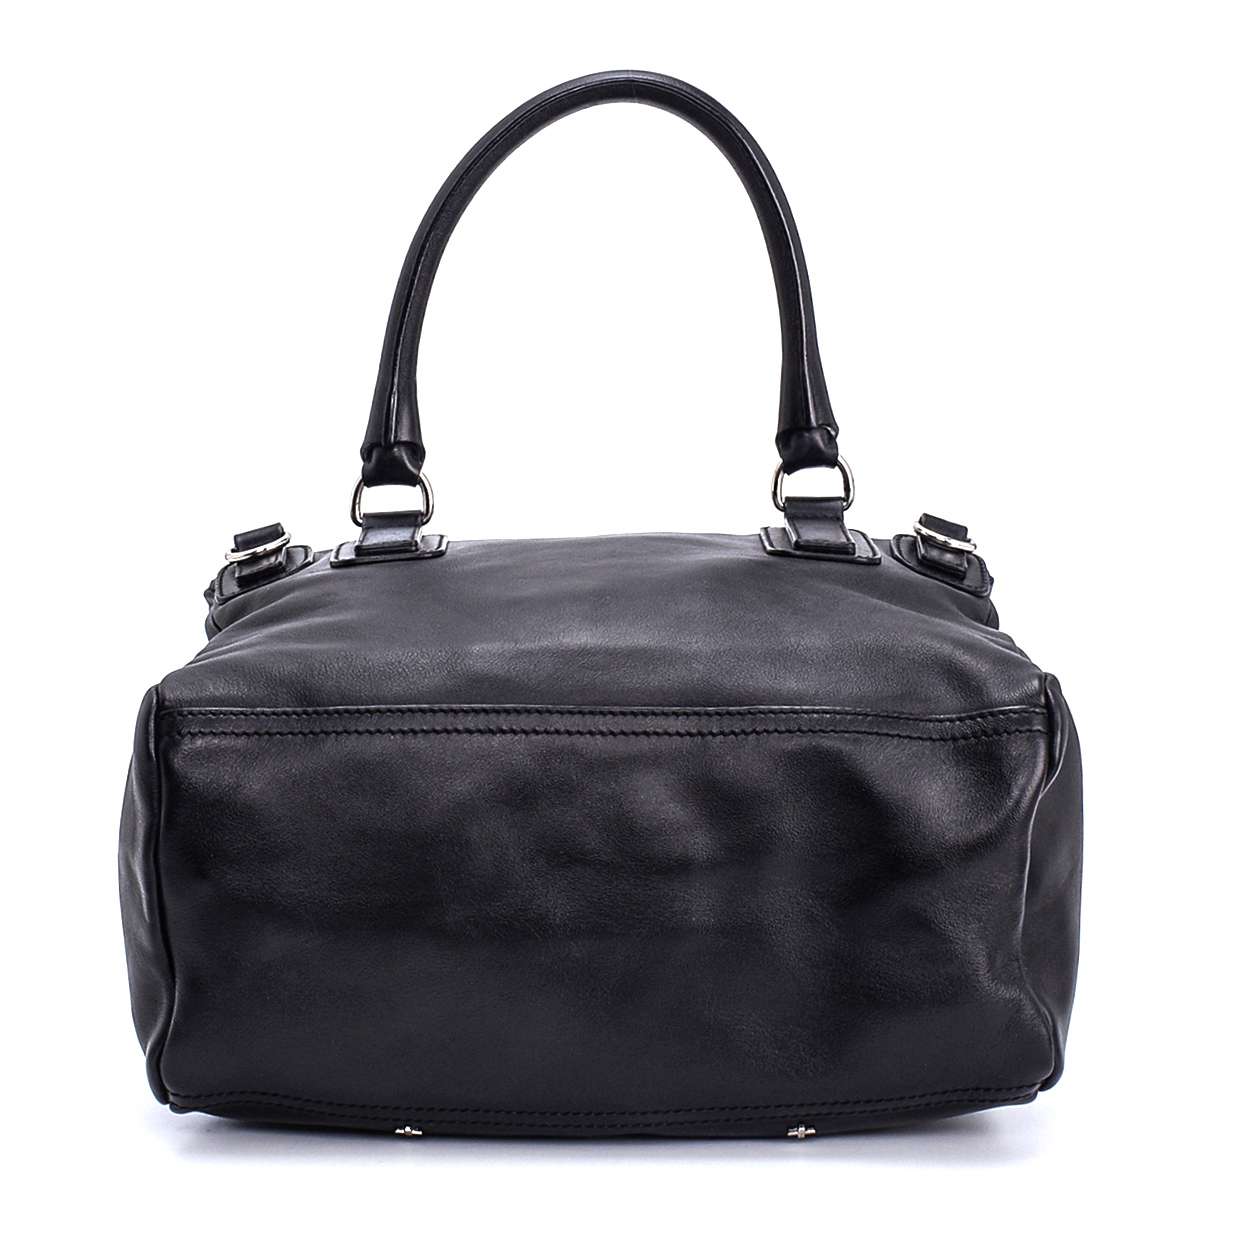 Givenchy - Black Leather Limited Edition Large Pandora Bag